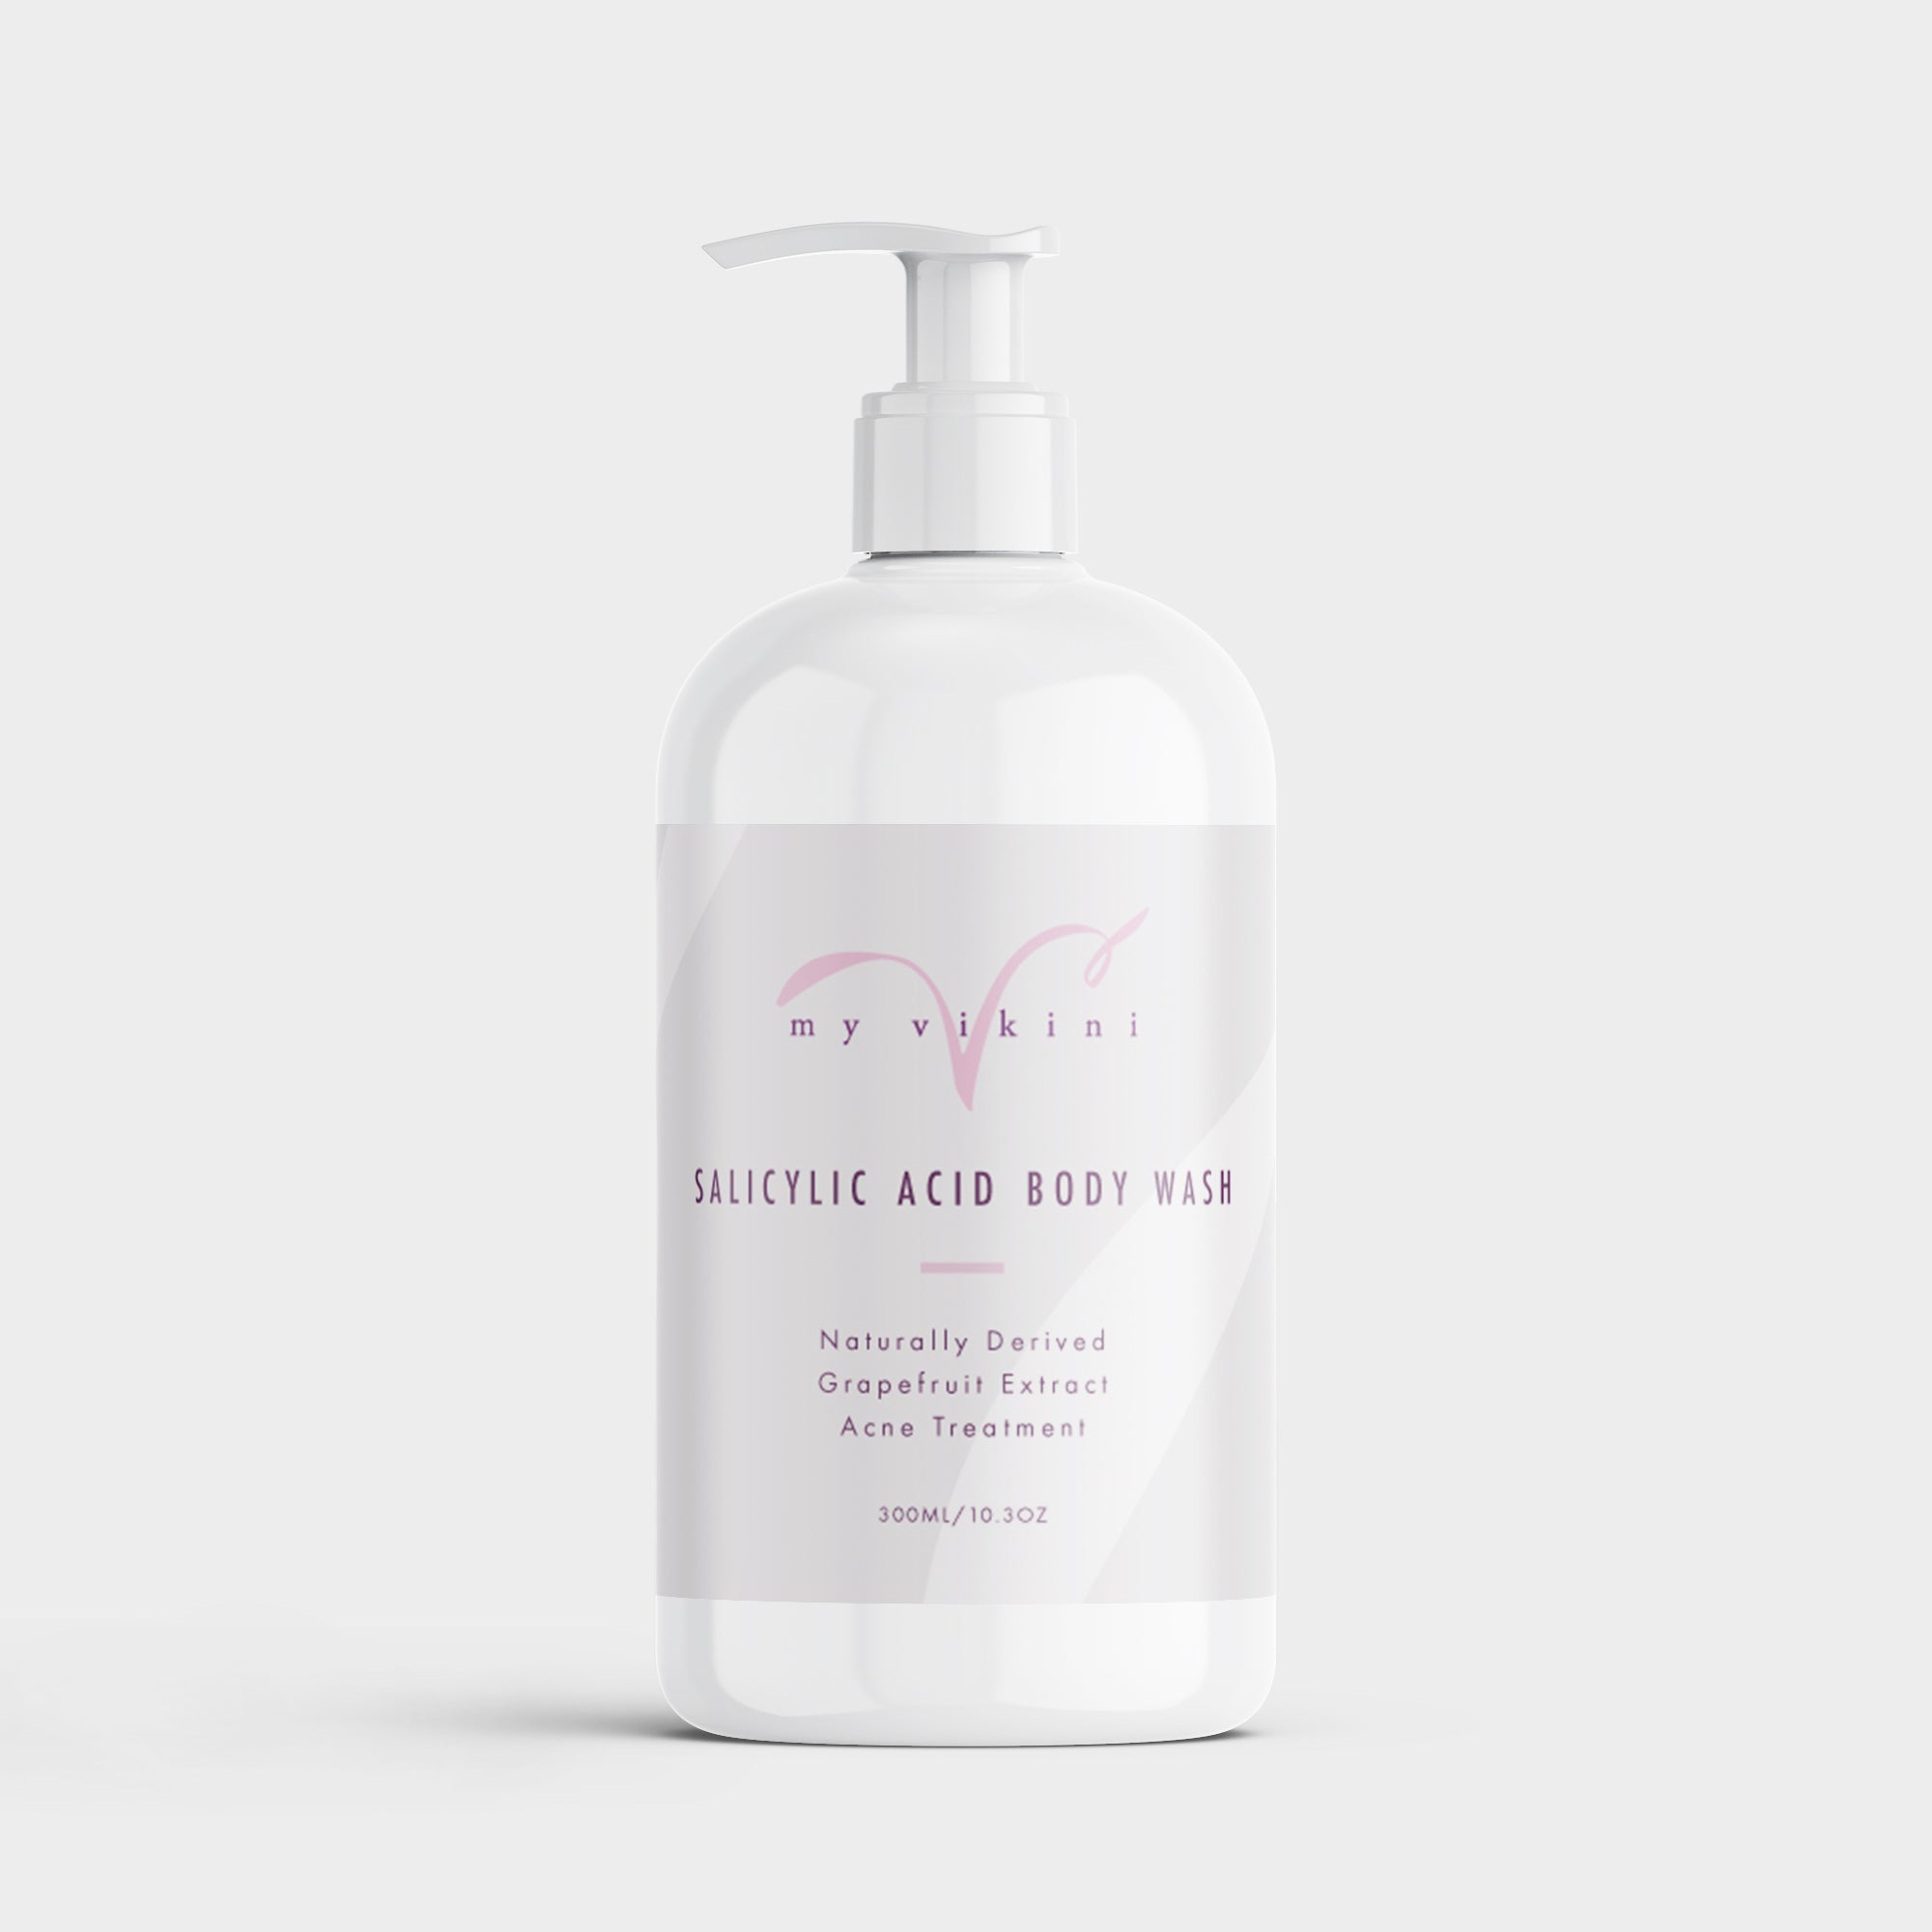 Salicylic Body Wash - My Vikini - Skin Cleanser